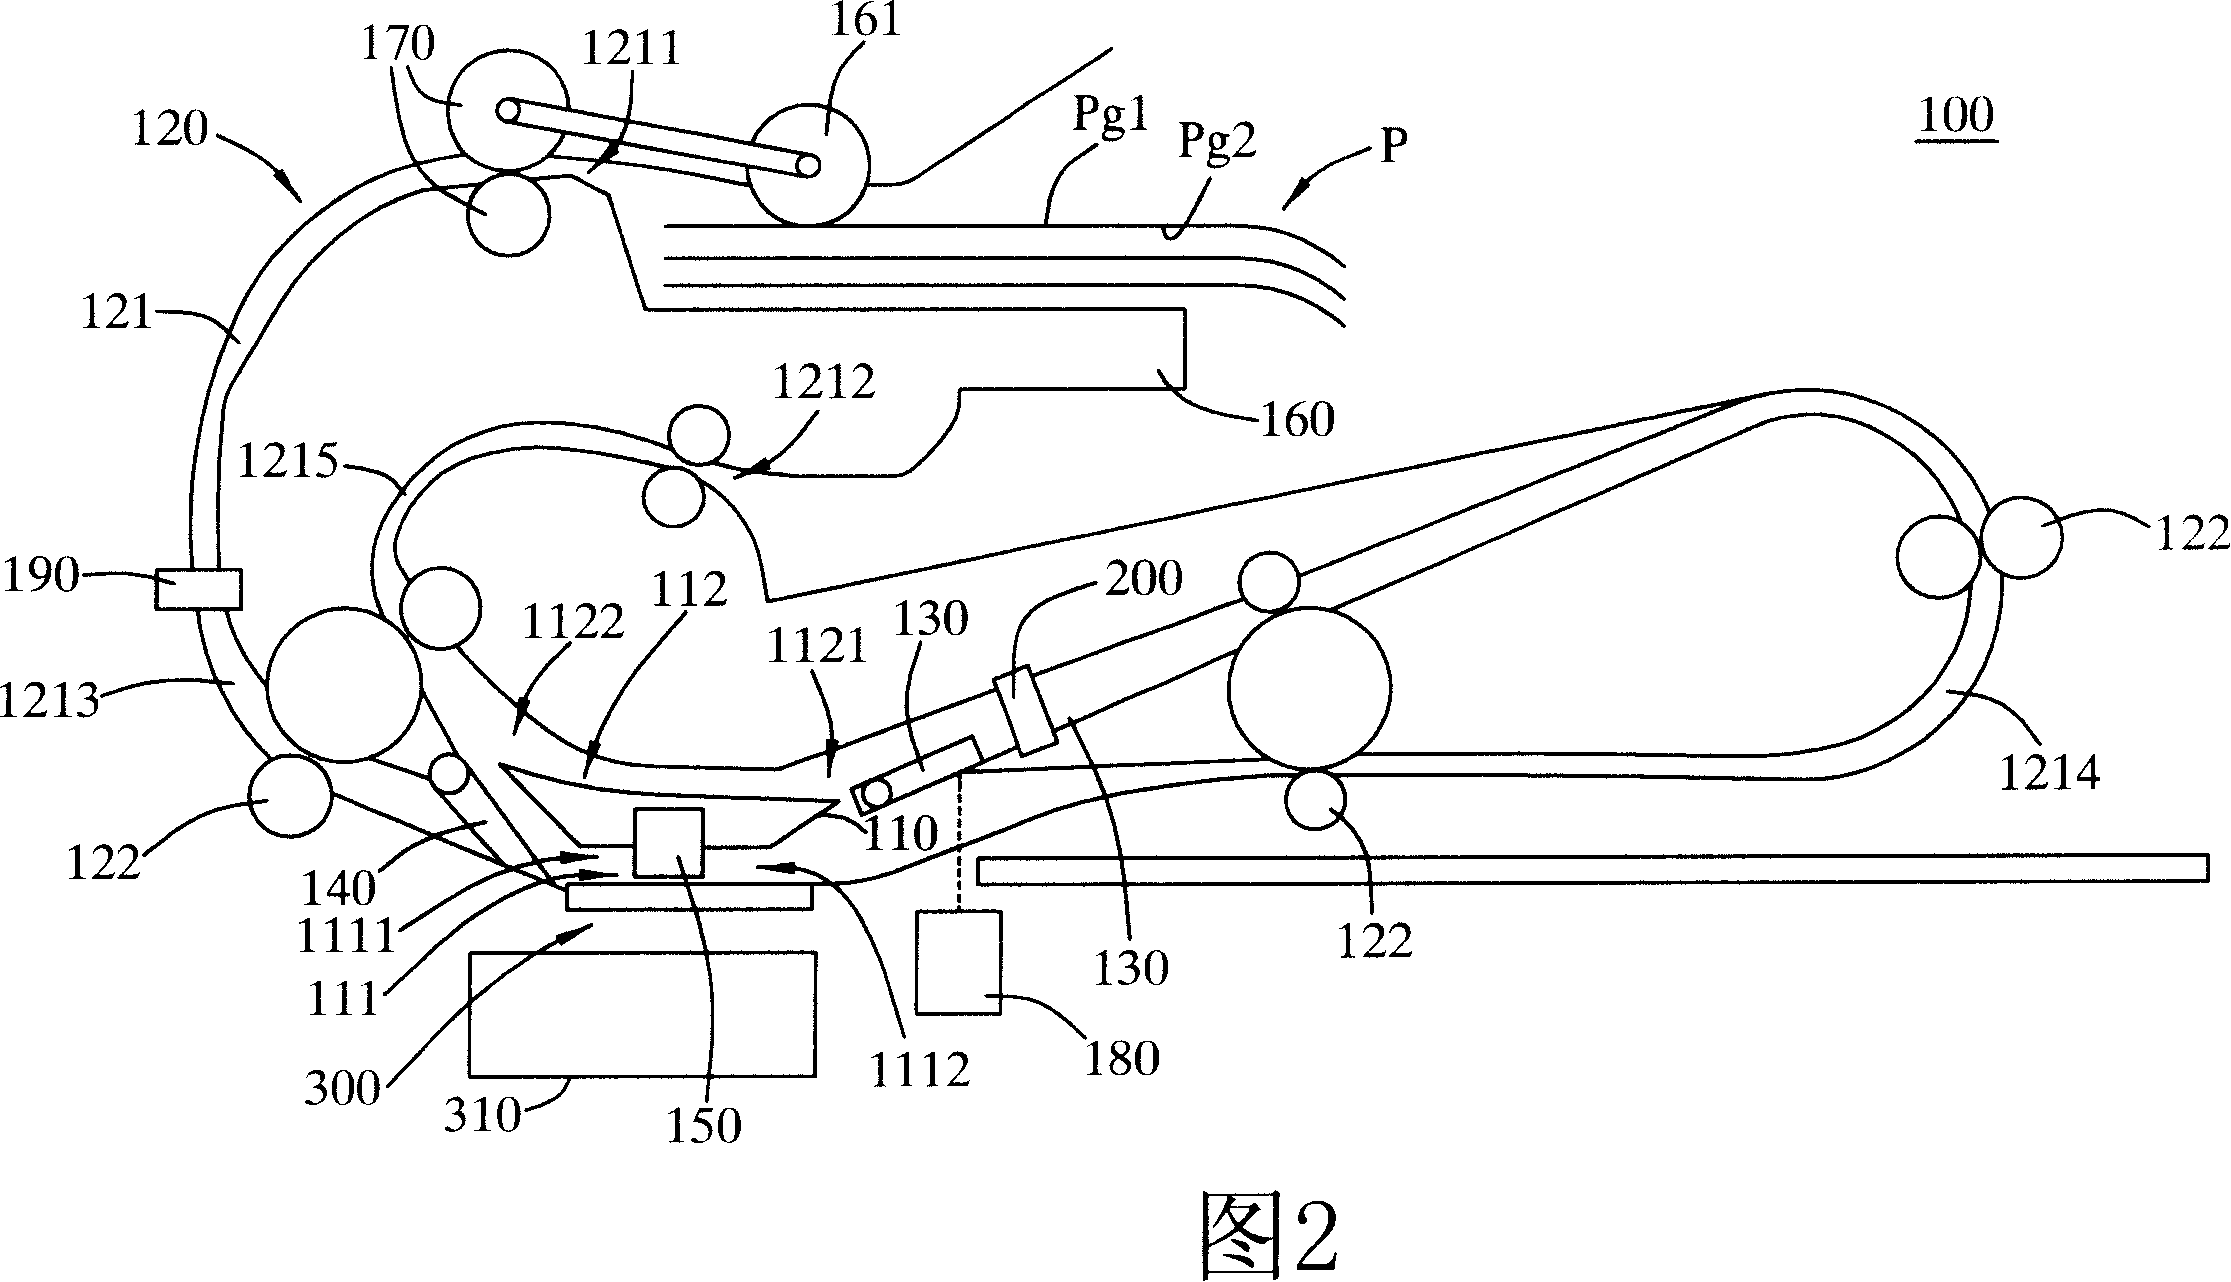 Paper advance mechanism